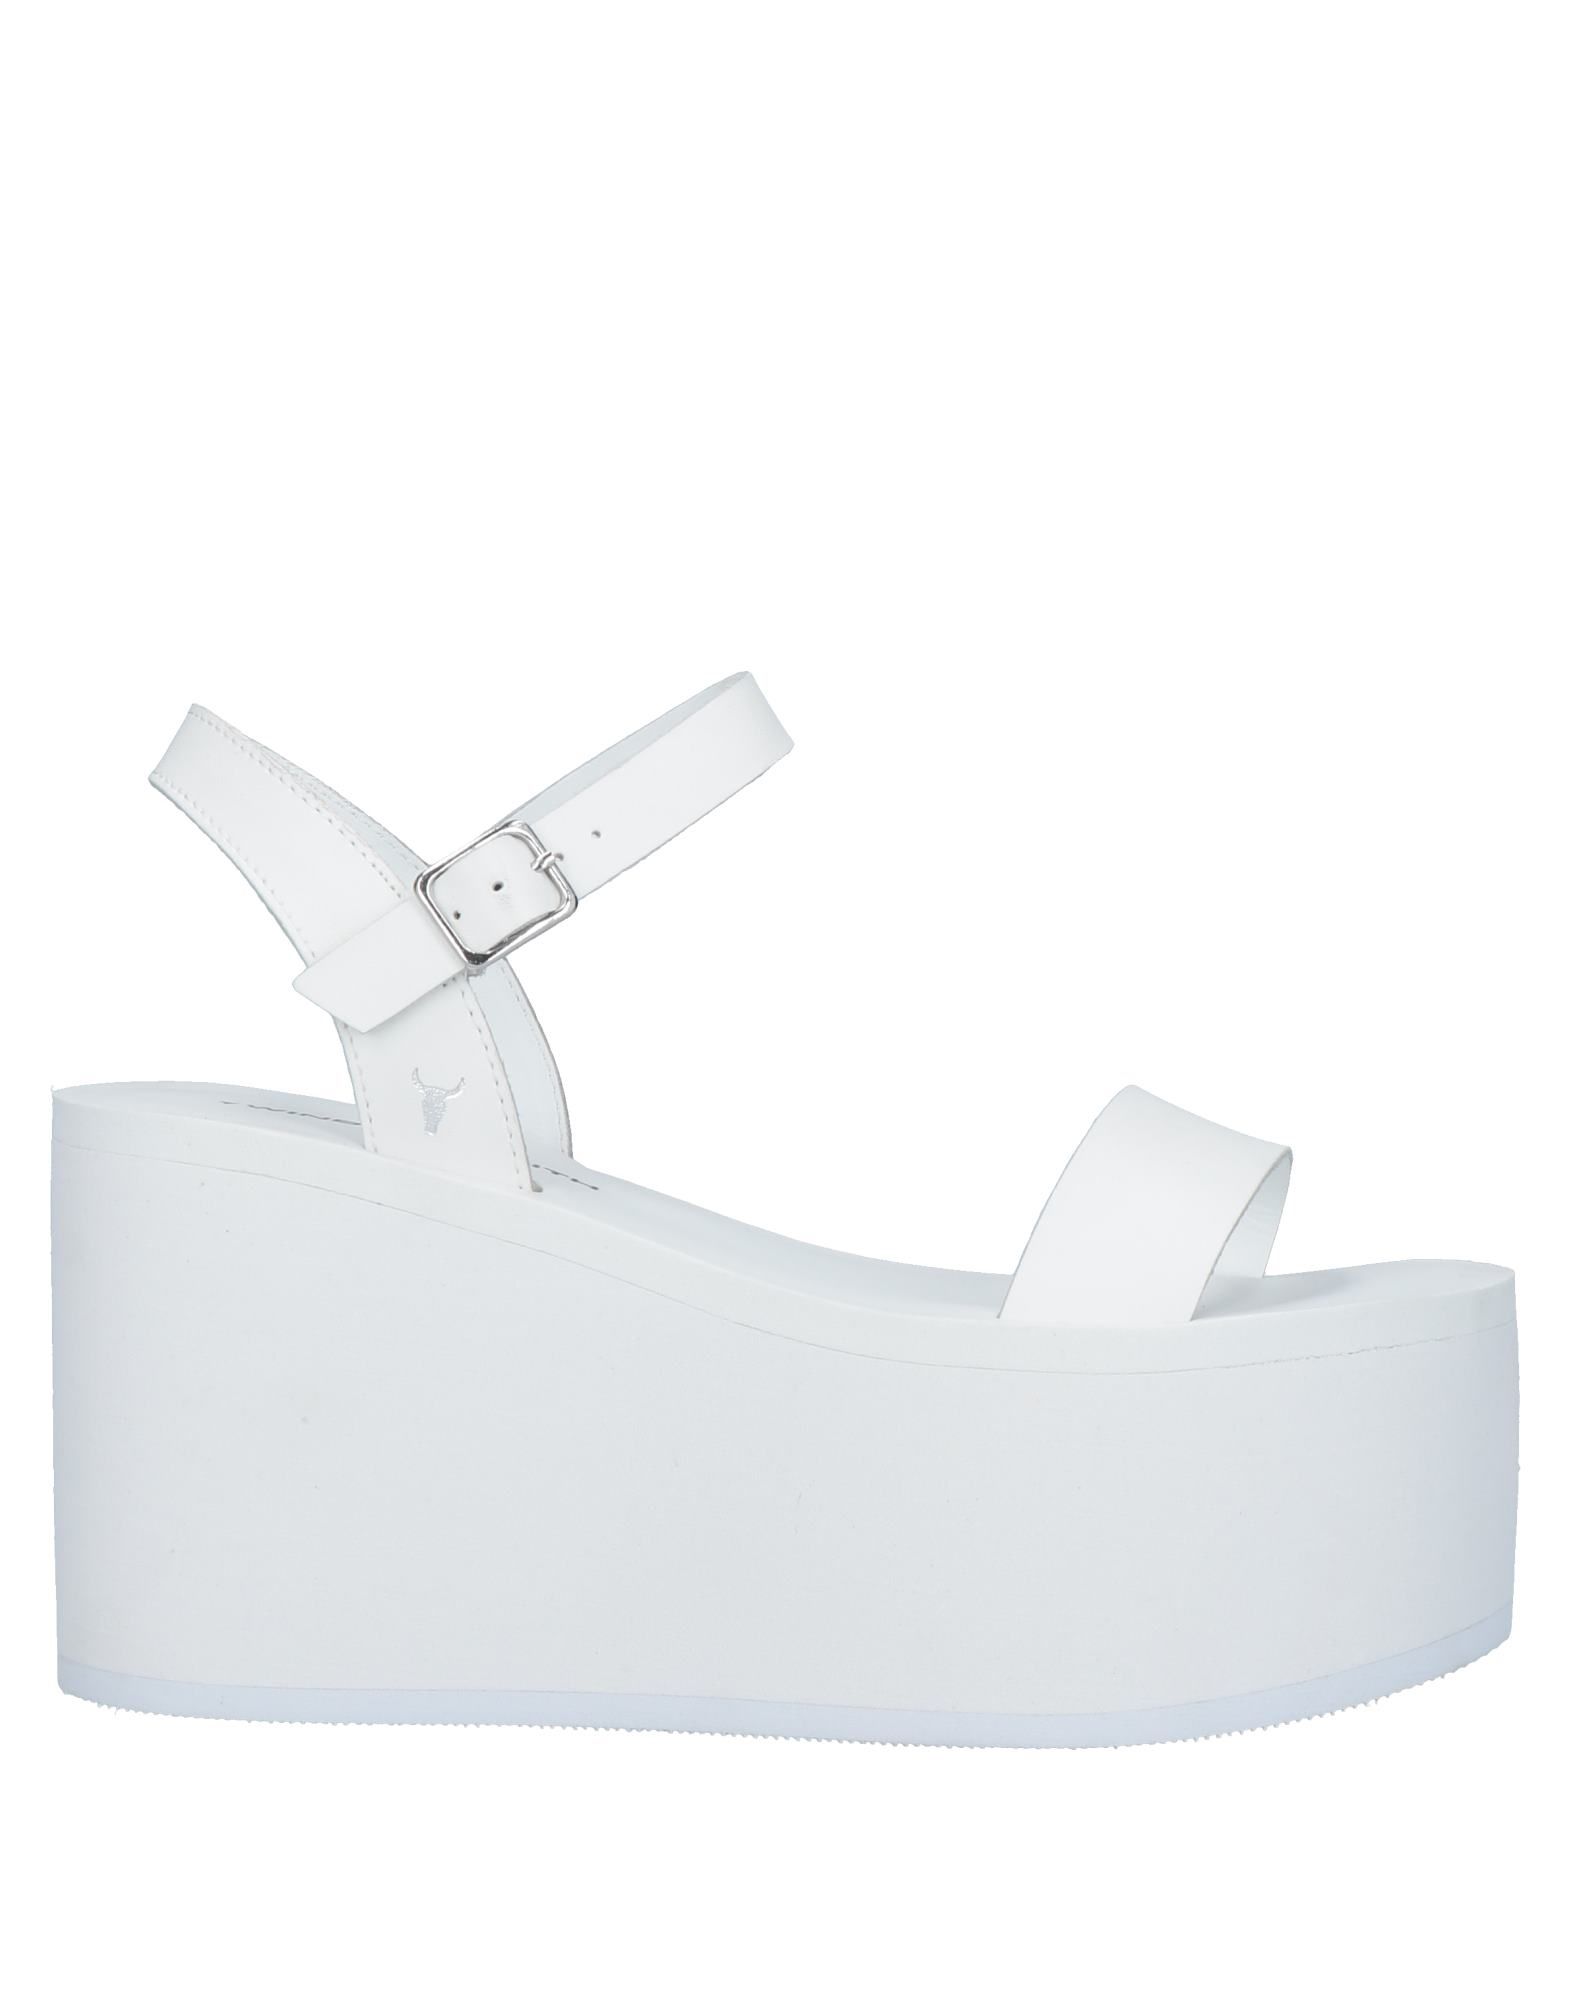 windsor smith white sandals